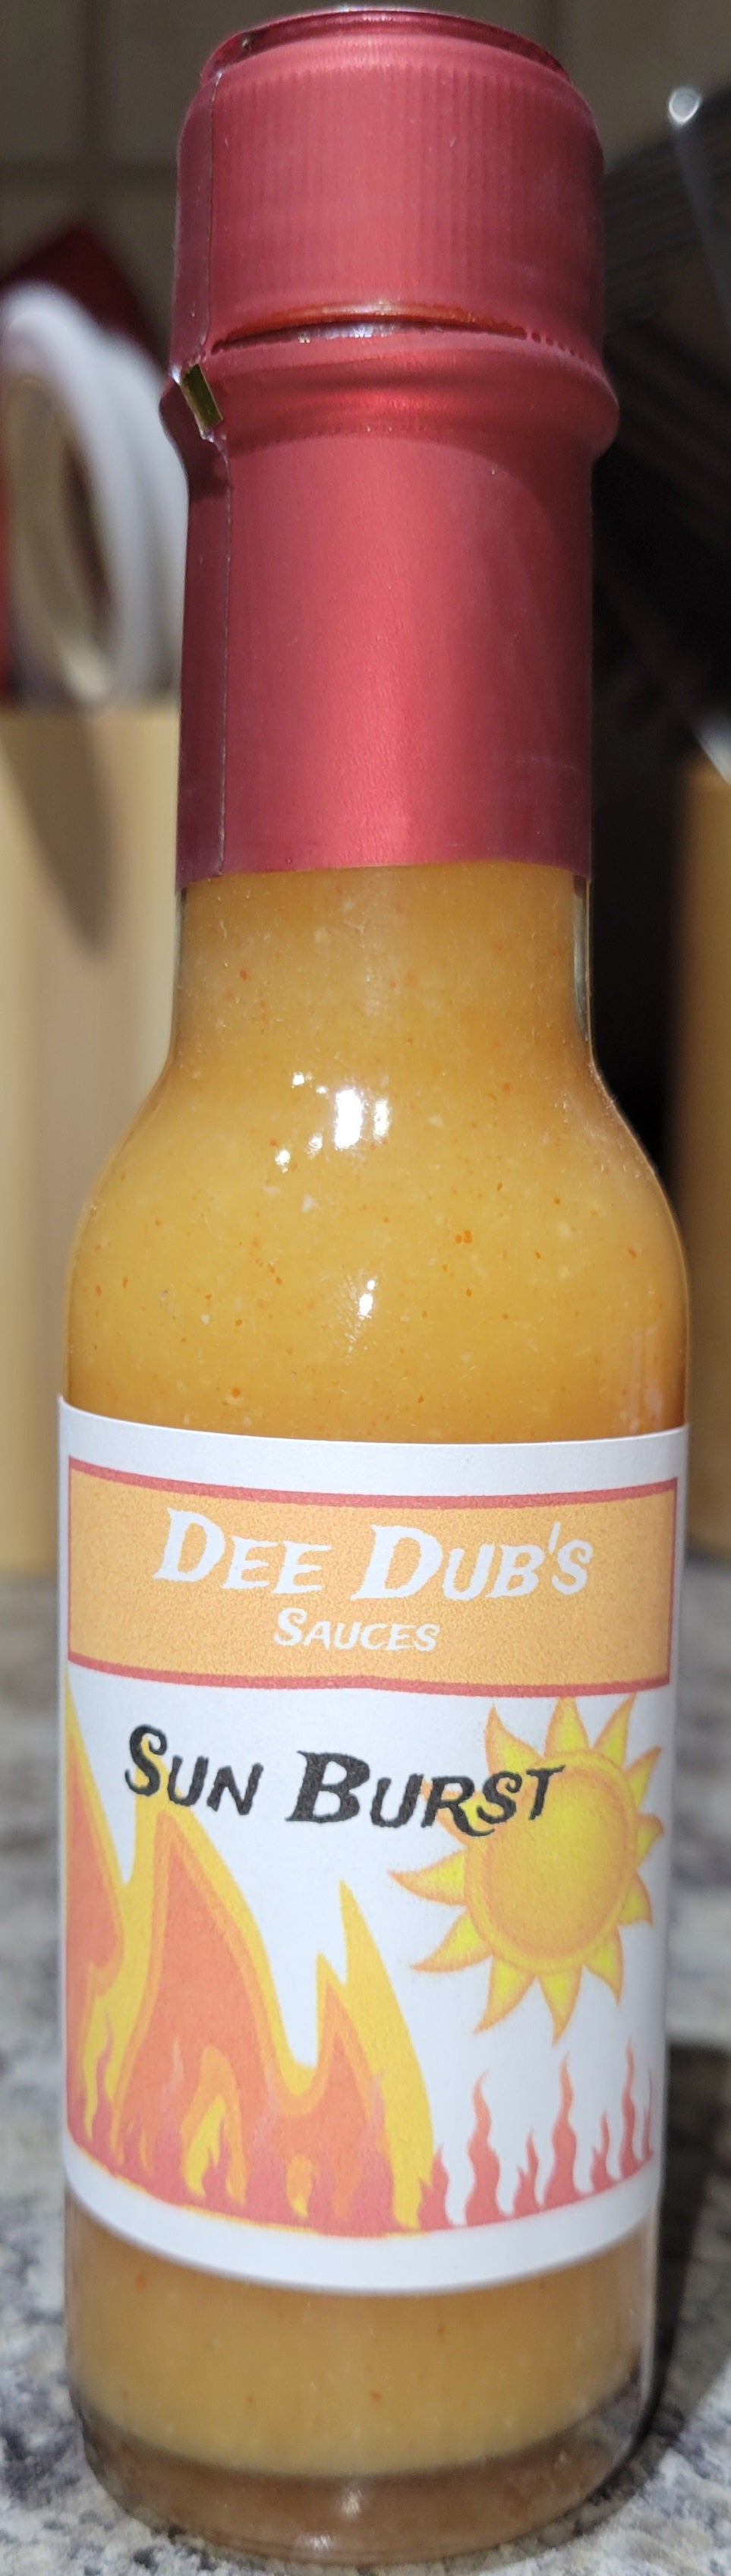 Dee Dub's Sun-Burst Sauce